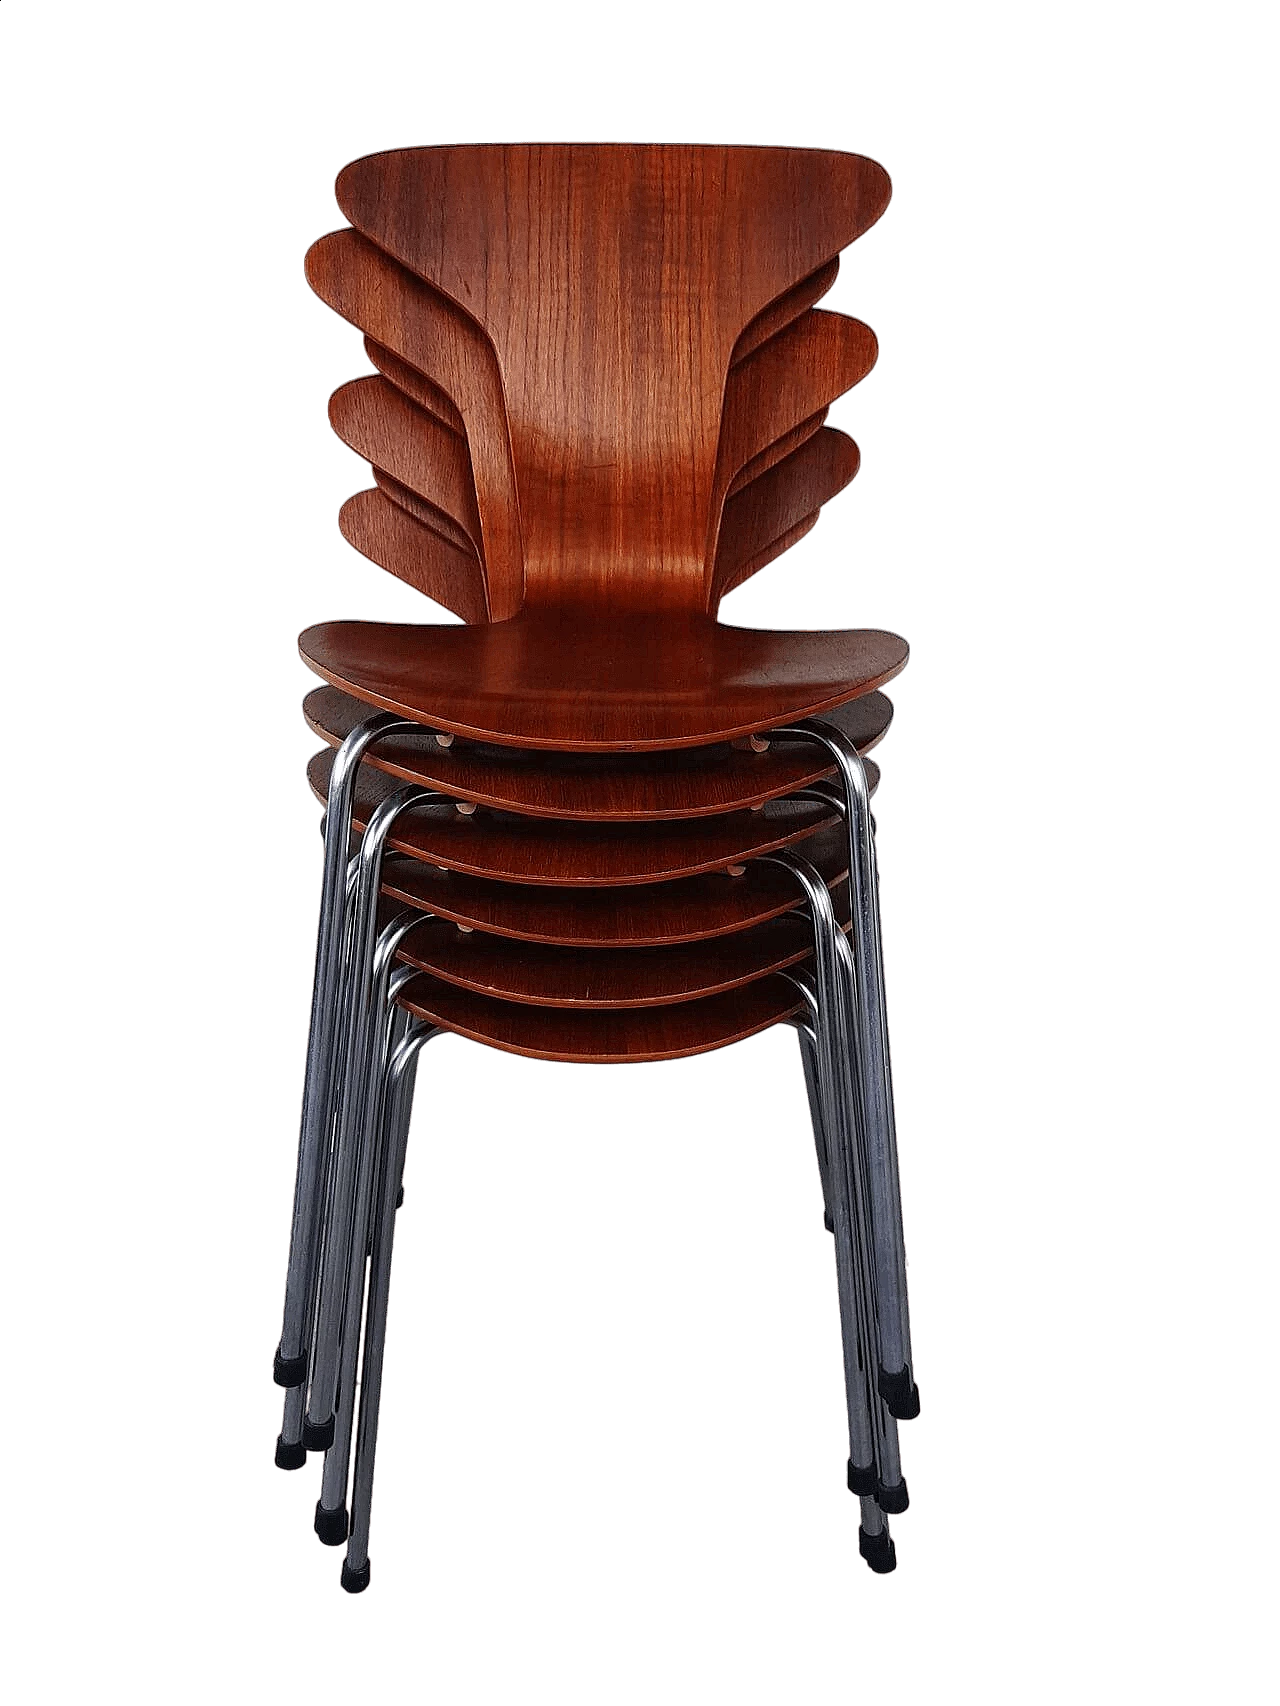 6 Chairs 3105 by Arne Jacobsen for Fritz Hansen, 1967 27